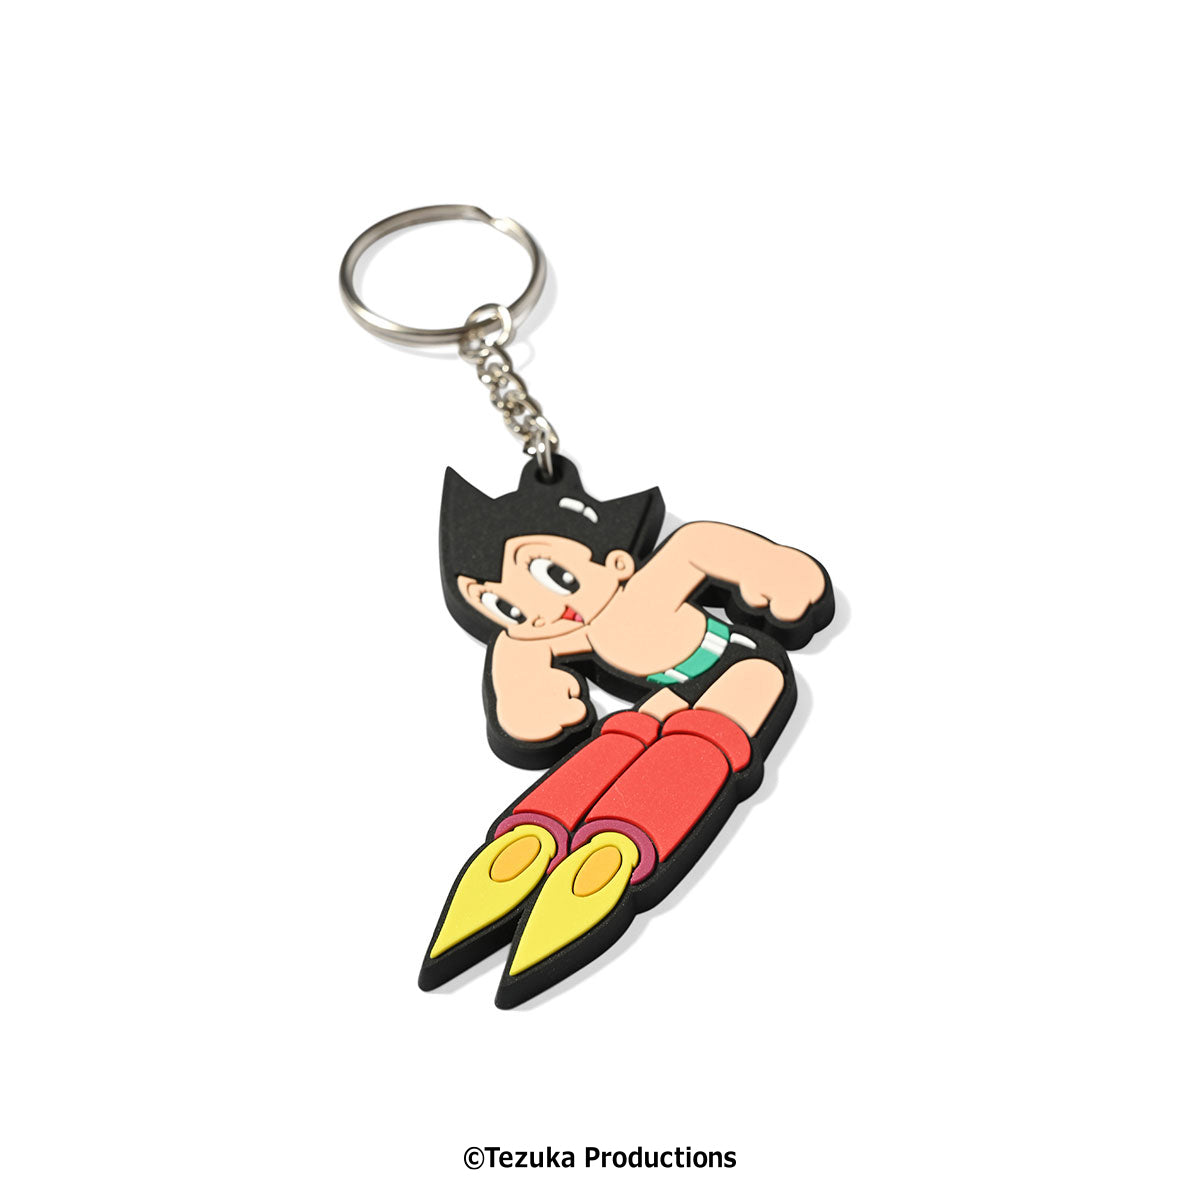 HOMEGAME × Astro Boy - RUBBER KEY CHAIN